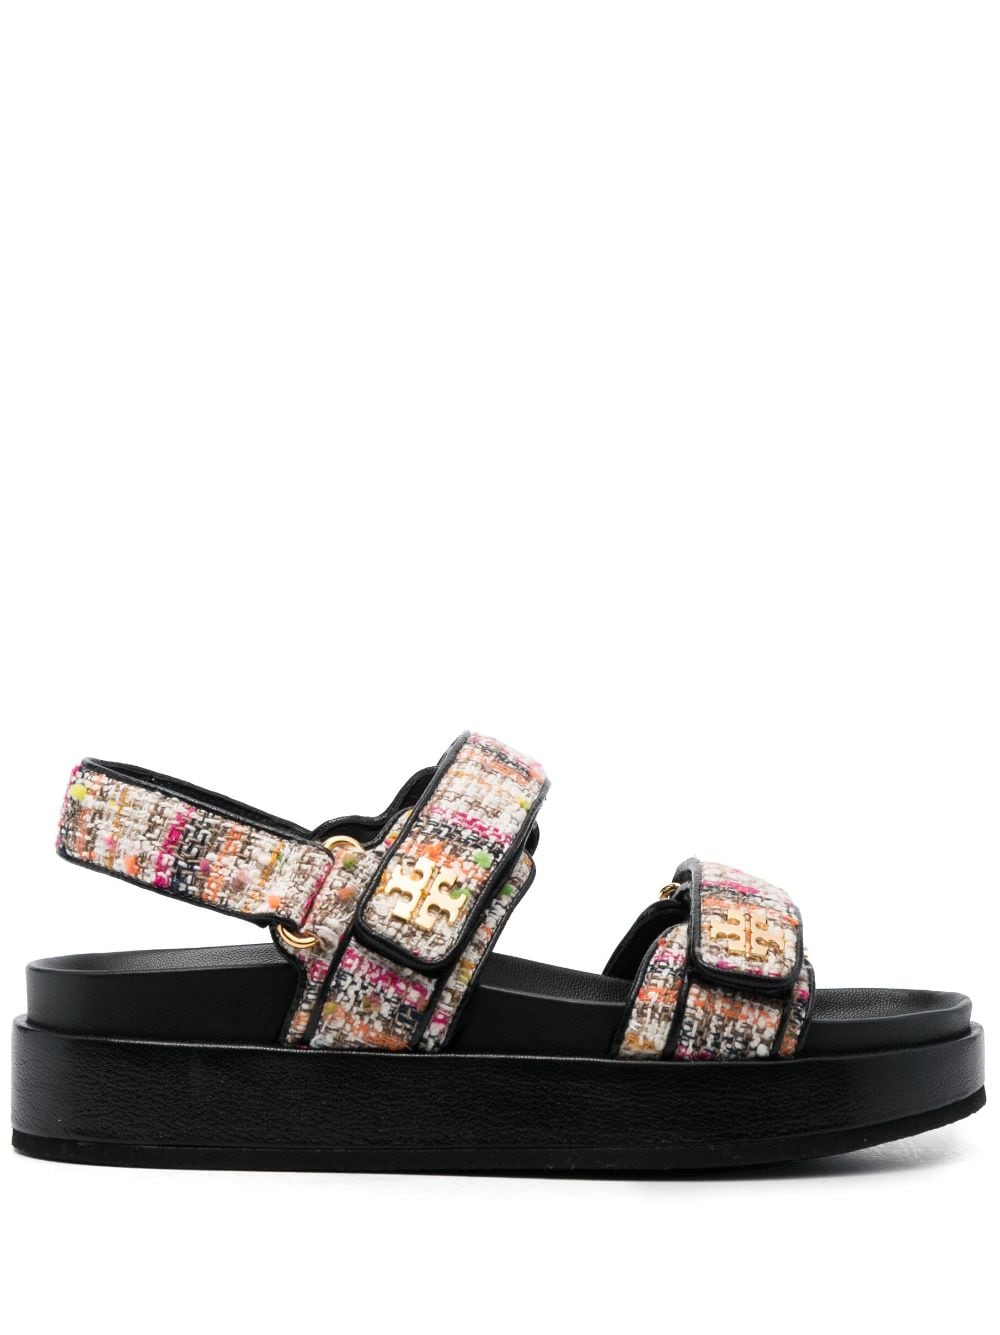 Kira Tweed Sandals in Multicoloured - Tory Burch